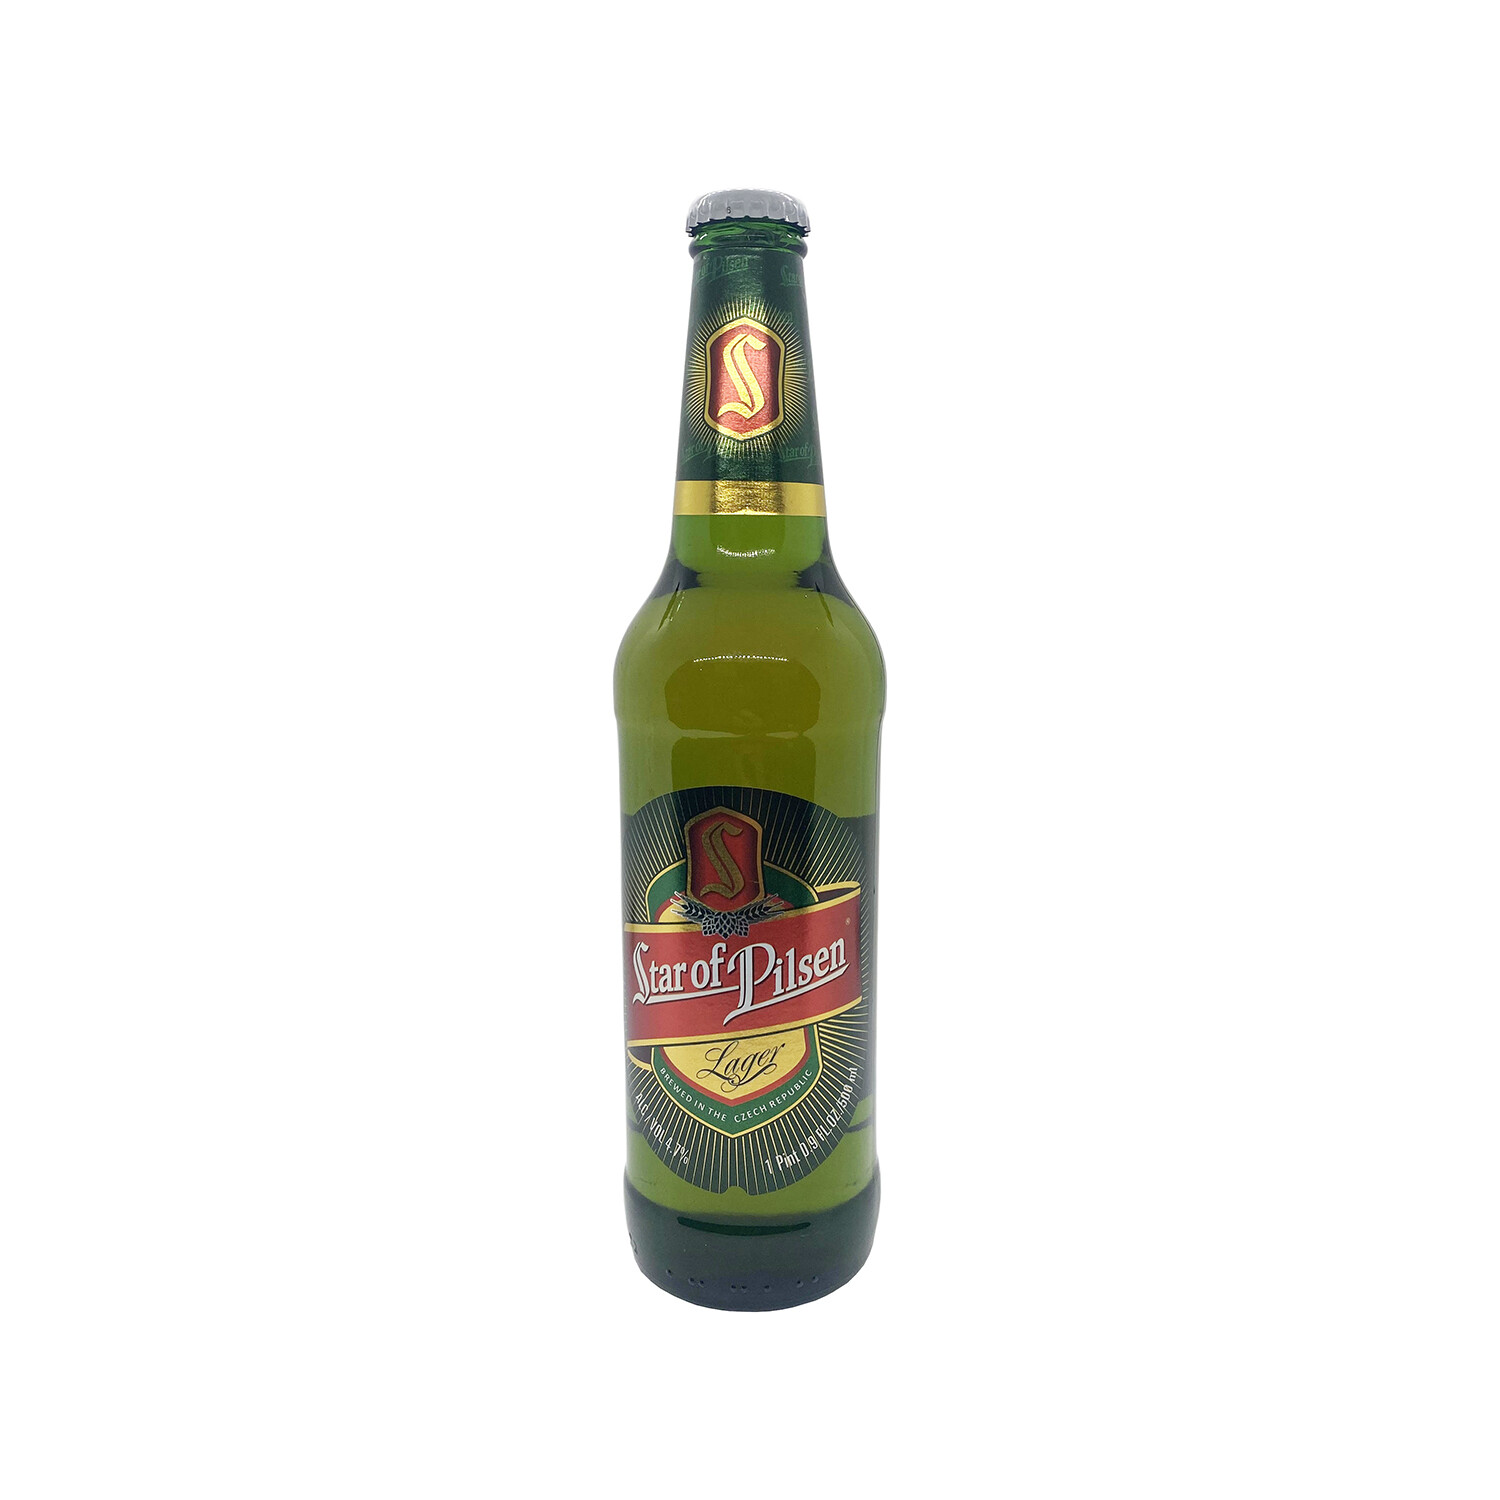 Star of Pilsen Lager 4.7% Beer Czech Republic 500ml